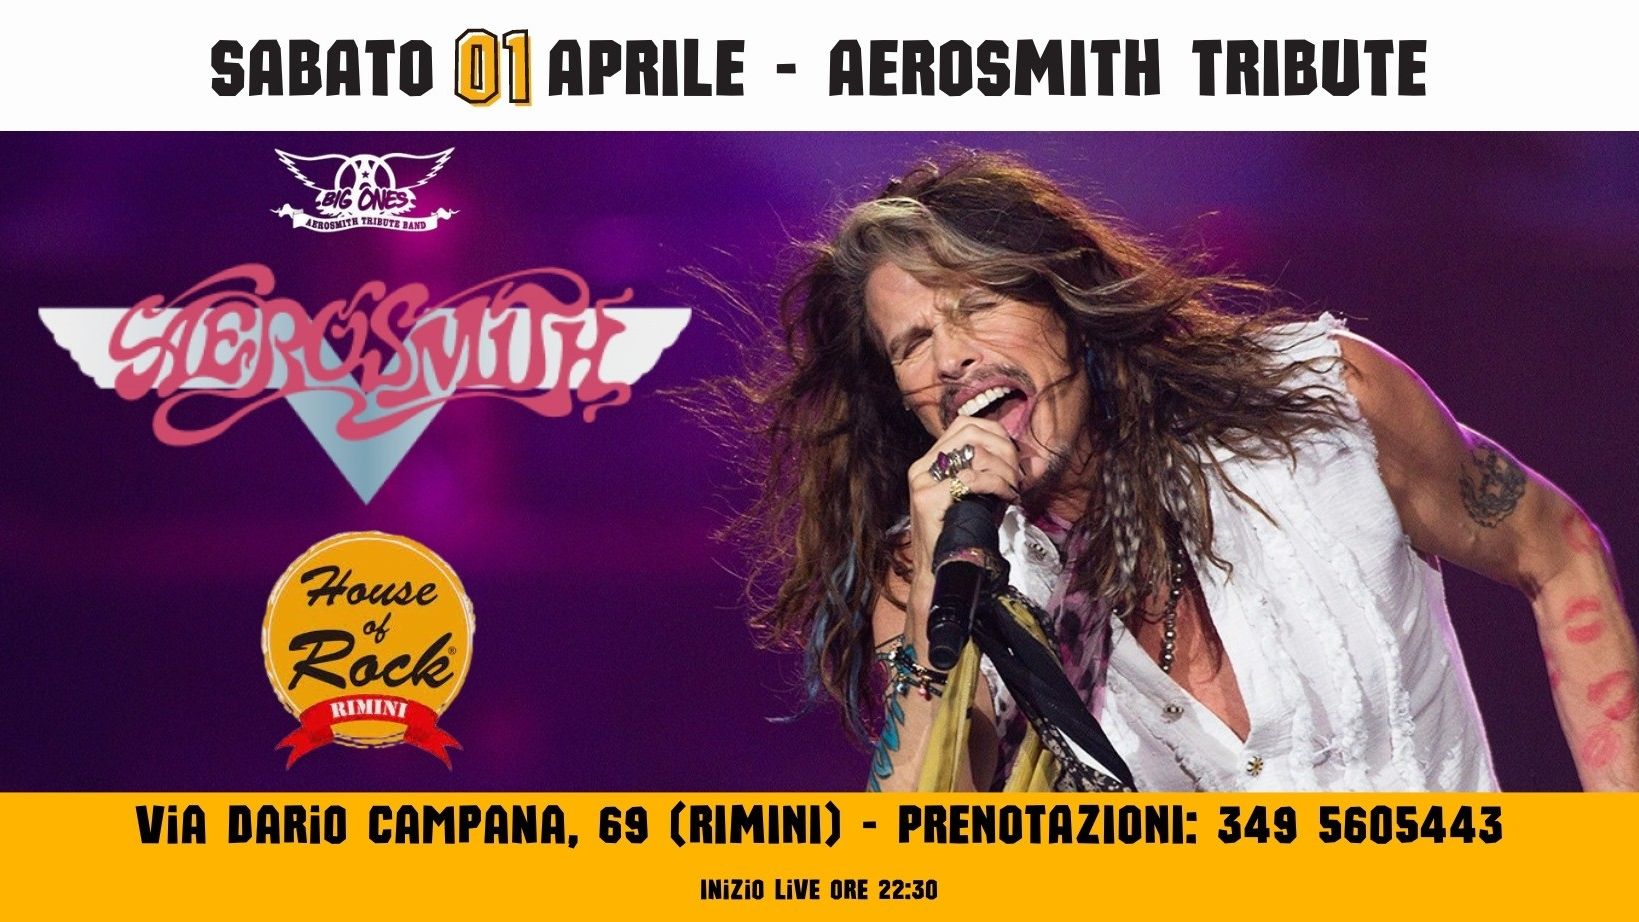 Aerosmith Tribute - Big Ones